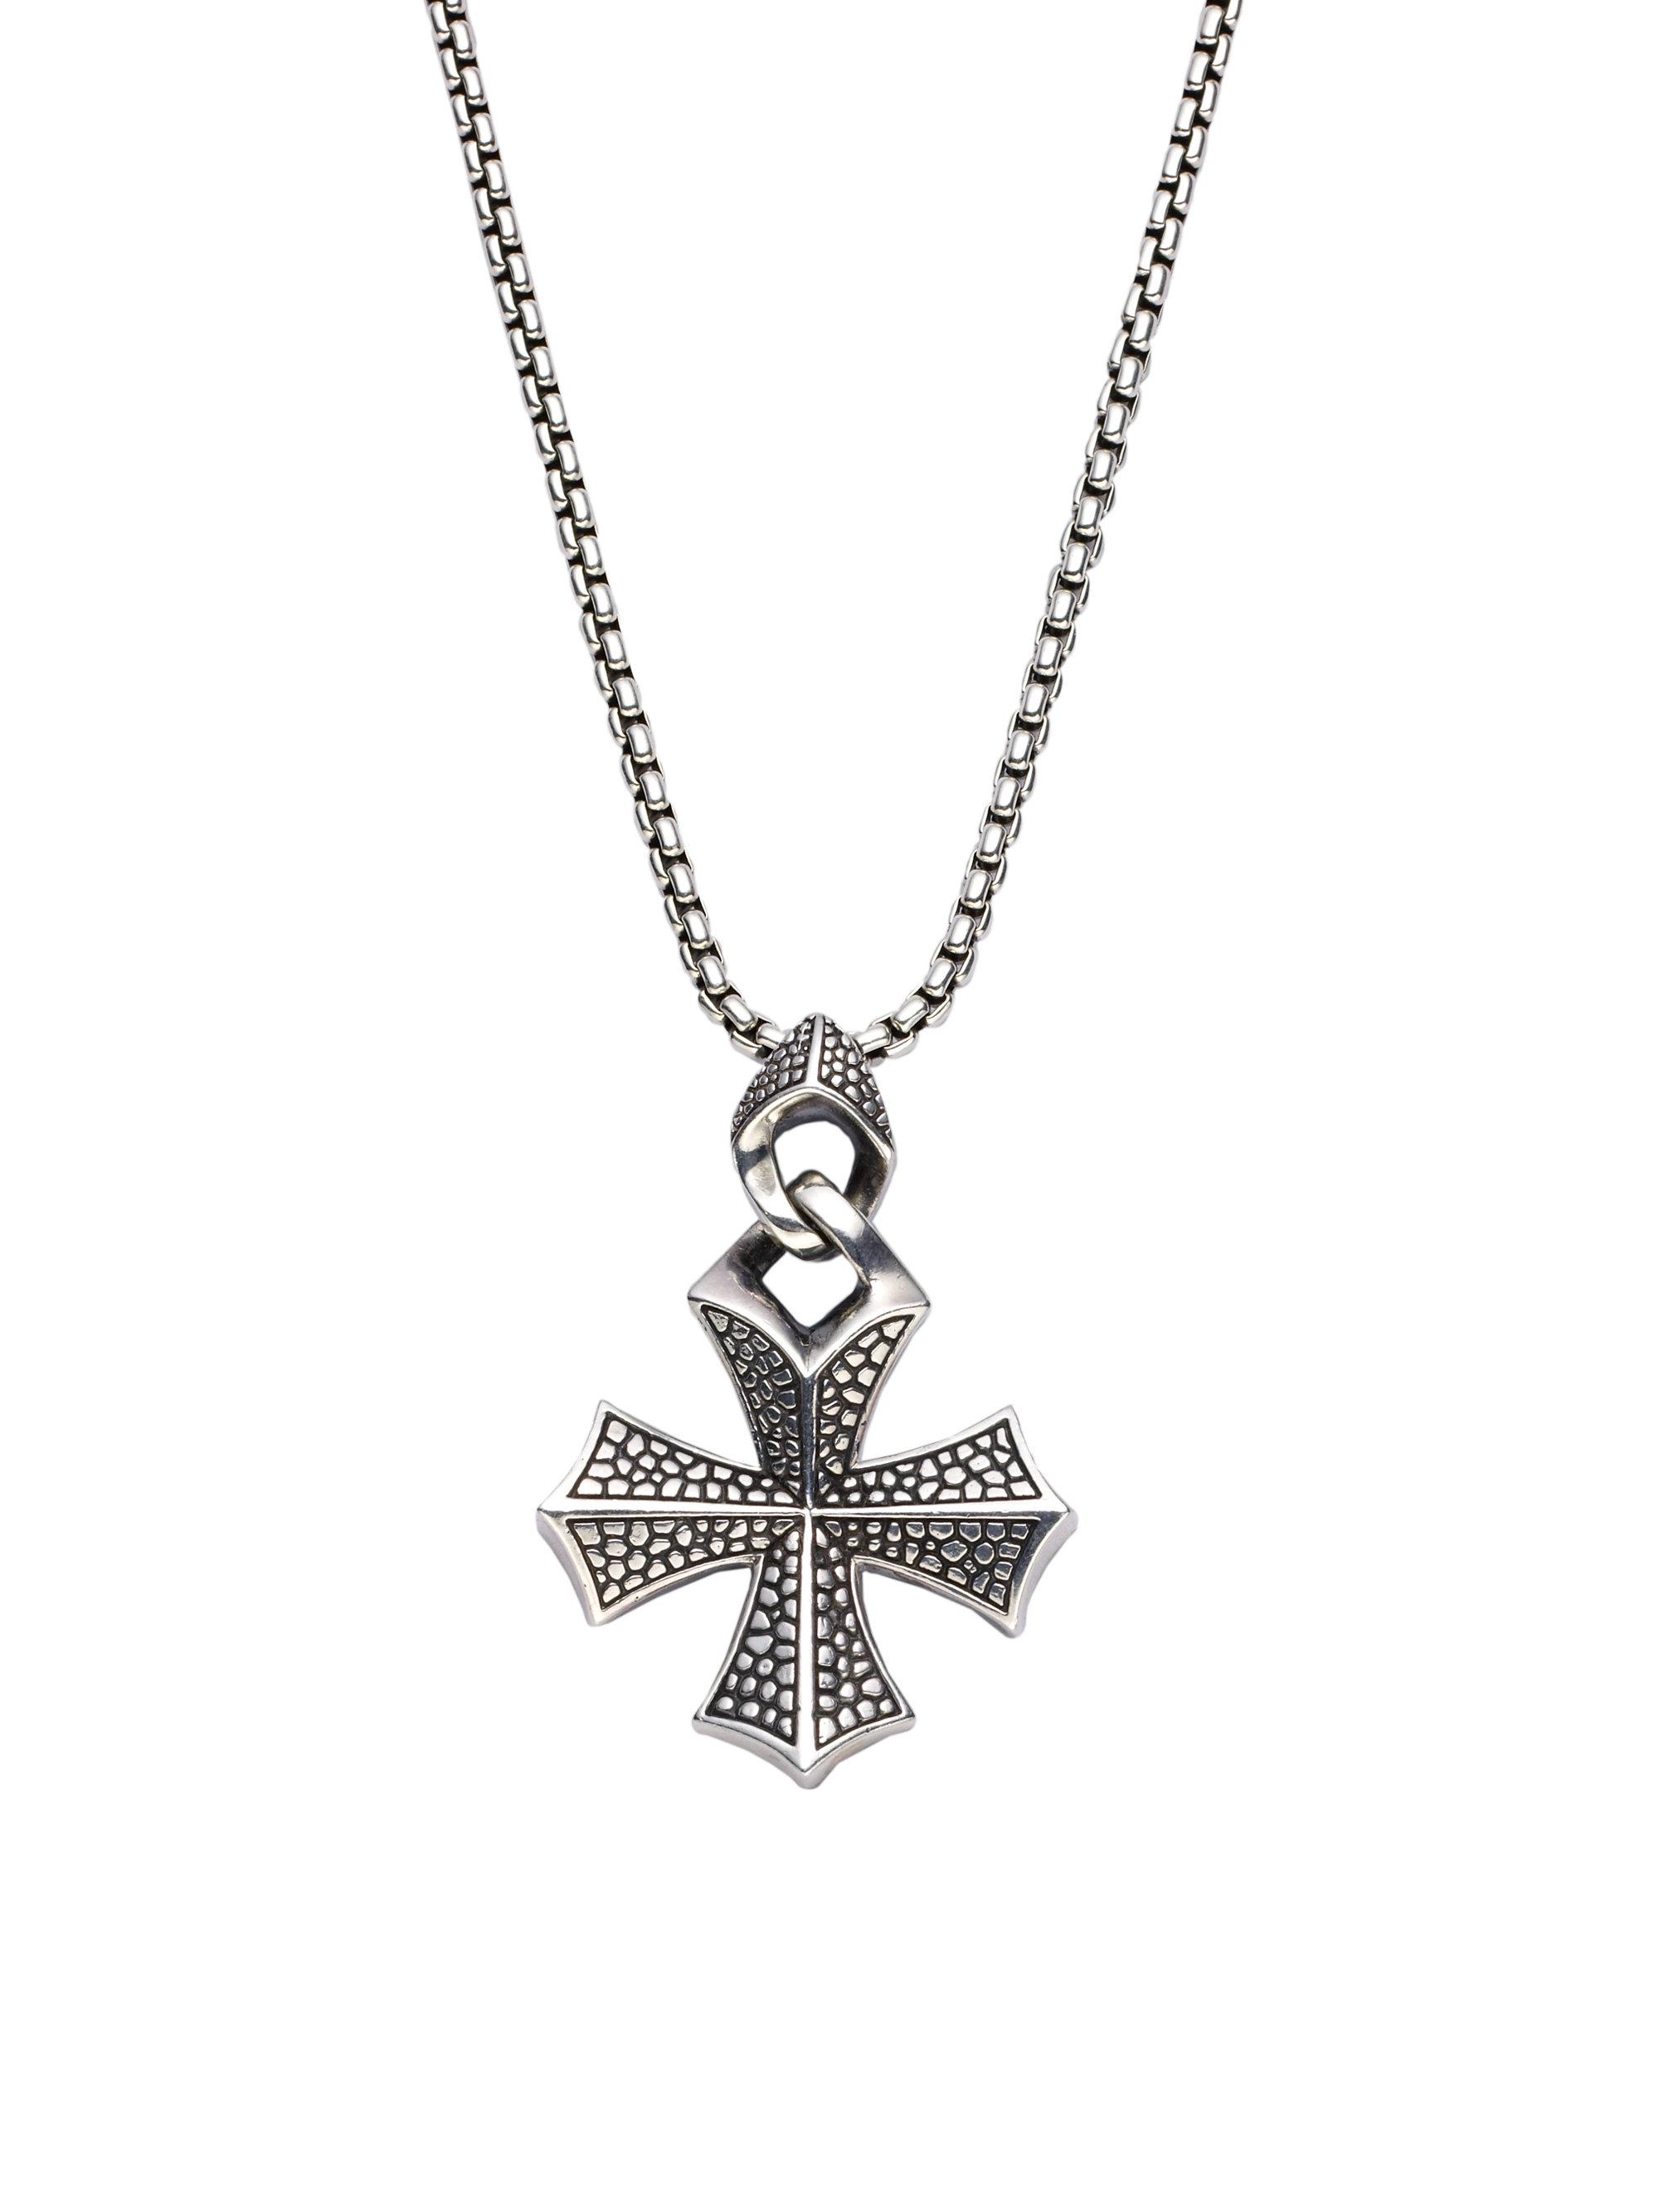 Lyst - Stephen Webster Sterling Silver Cross Necklace in Metallic for Men